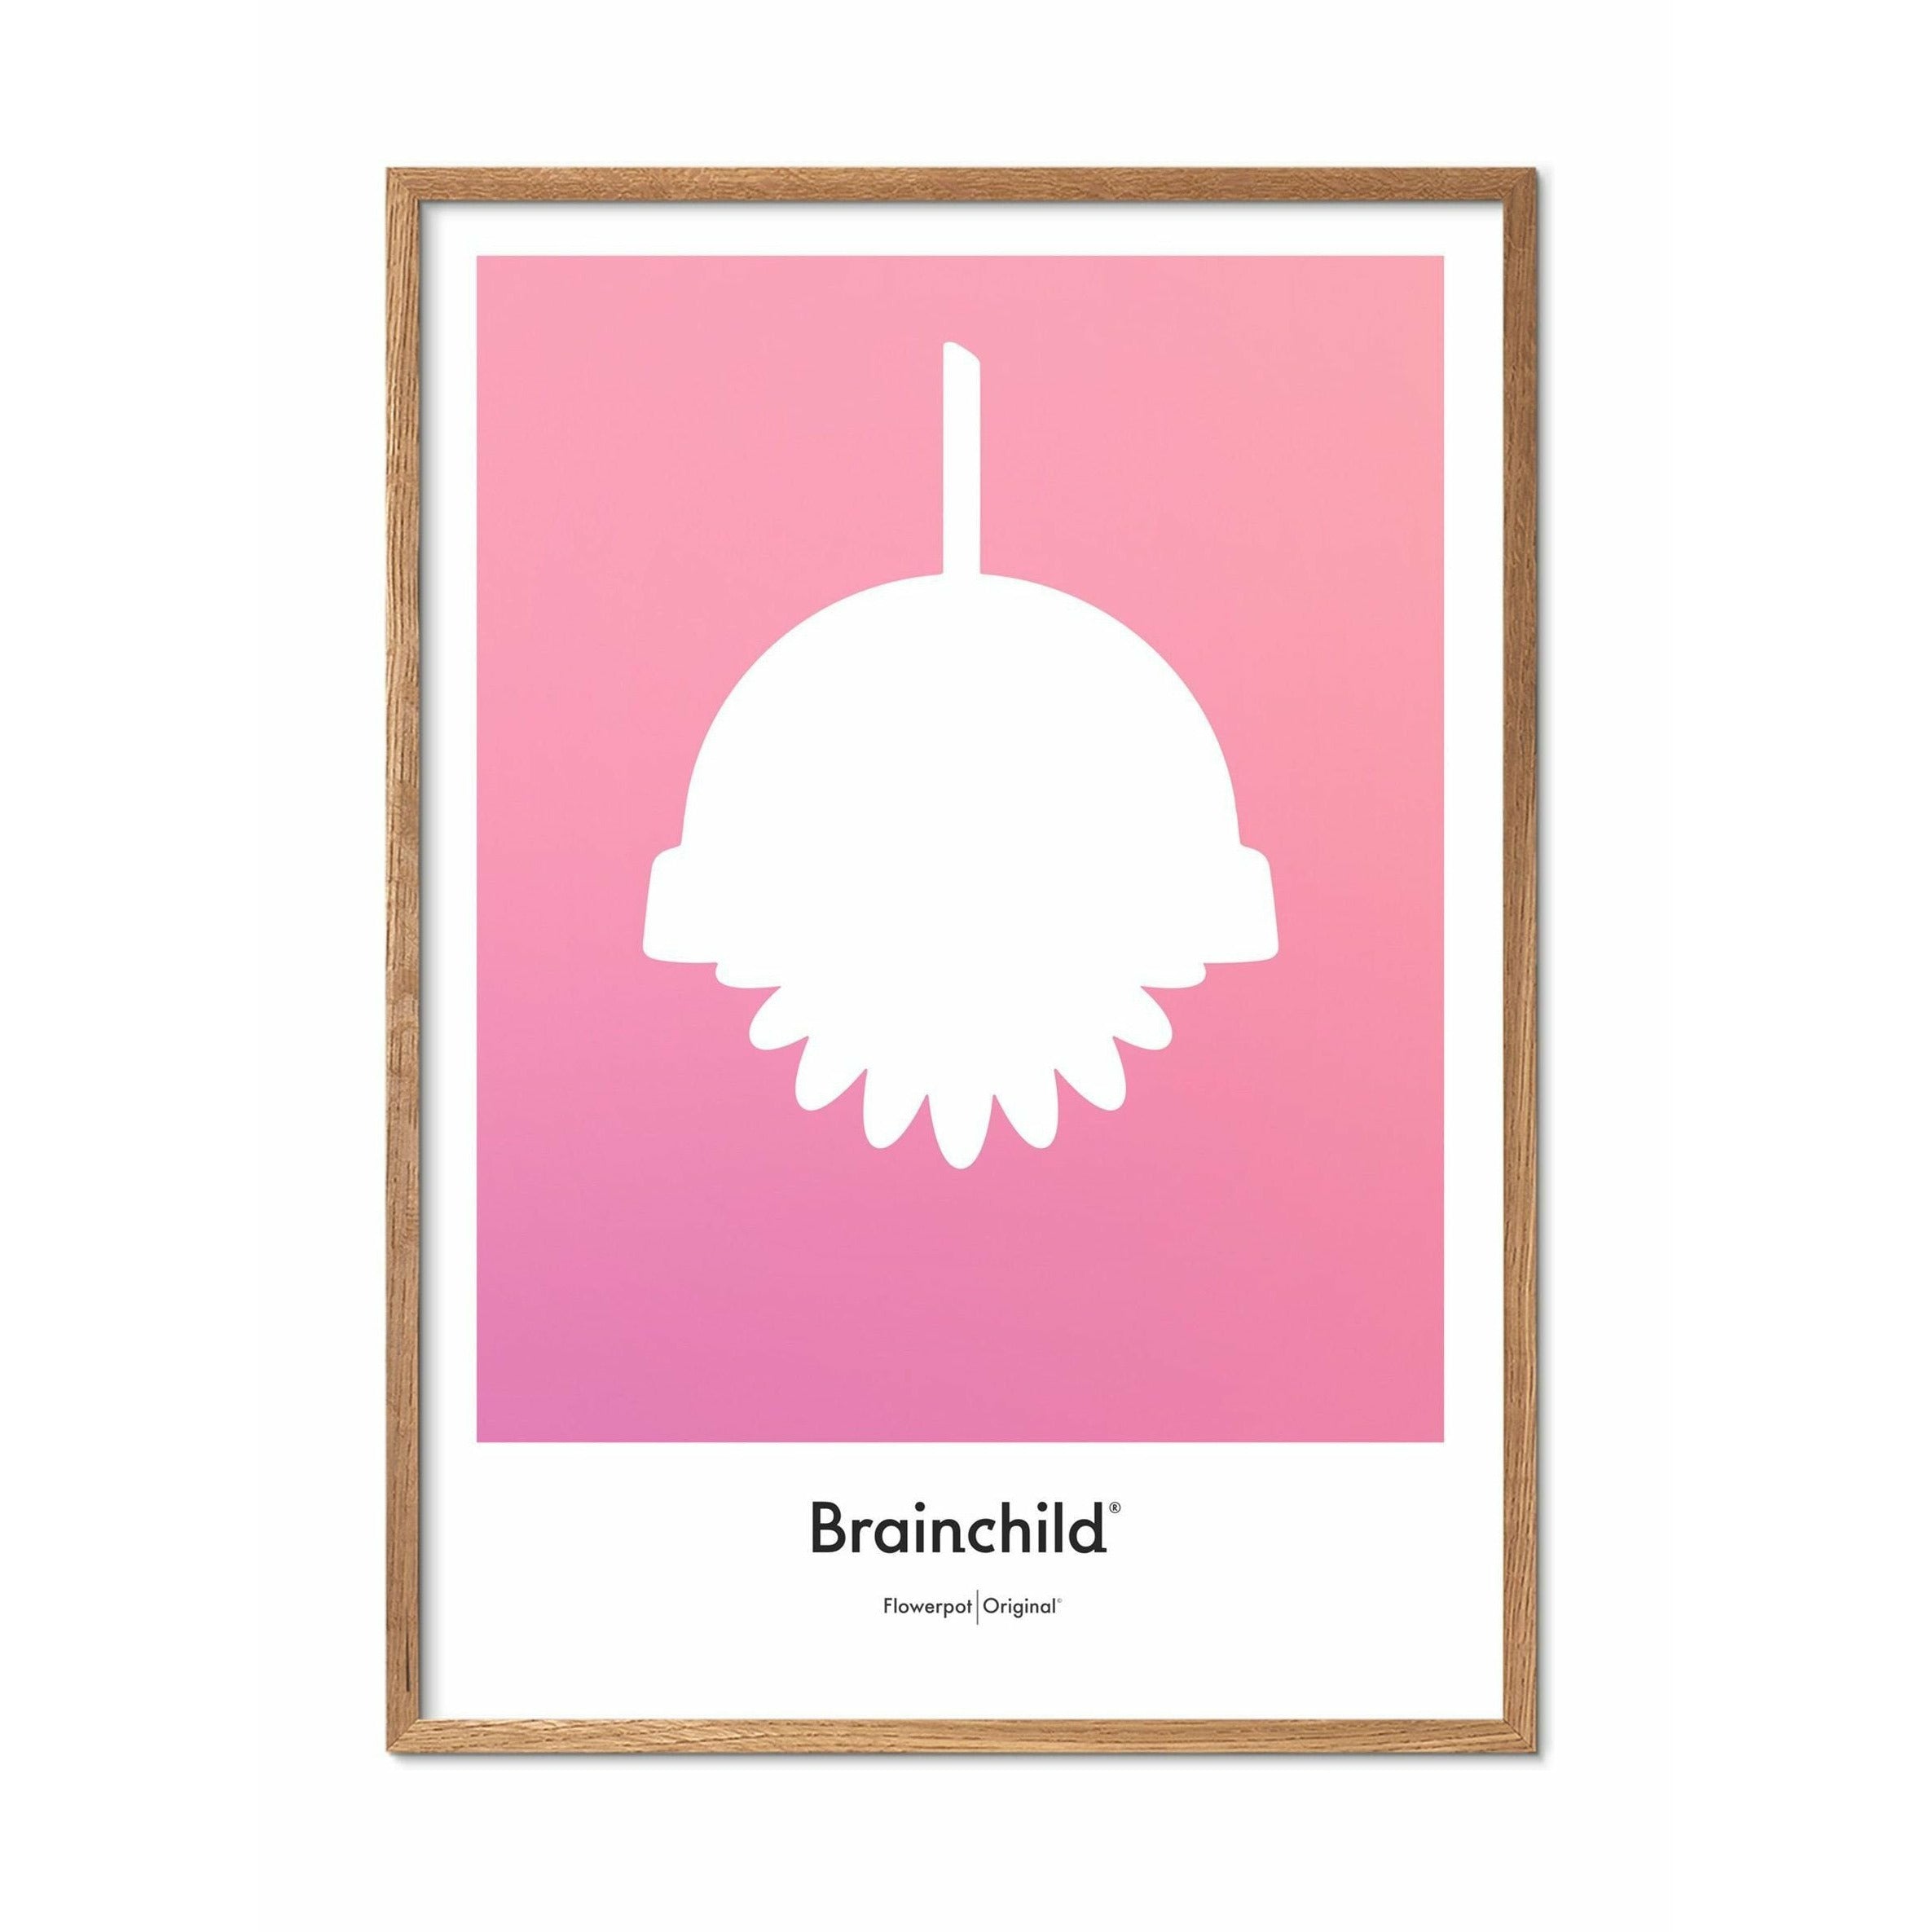 Brainchild Flowerpot ontwerppictogram Poster, frame gemaakt van licht hout 30x40 cm, roze